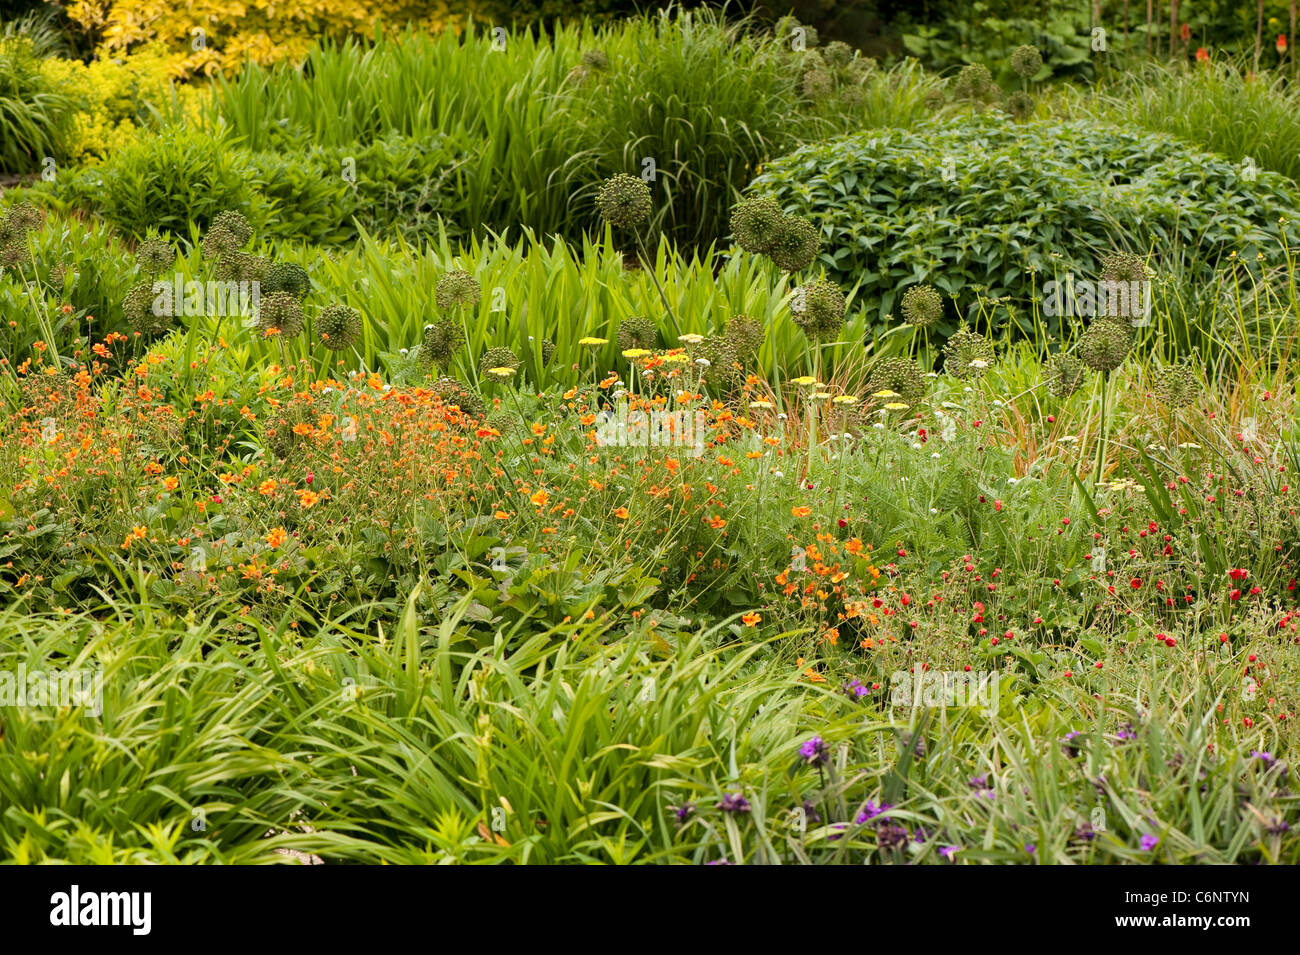 The Hot Garden in June, RHS Rosemoor, Devon, England, United Kingdom Stock Photo